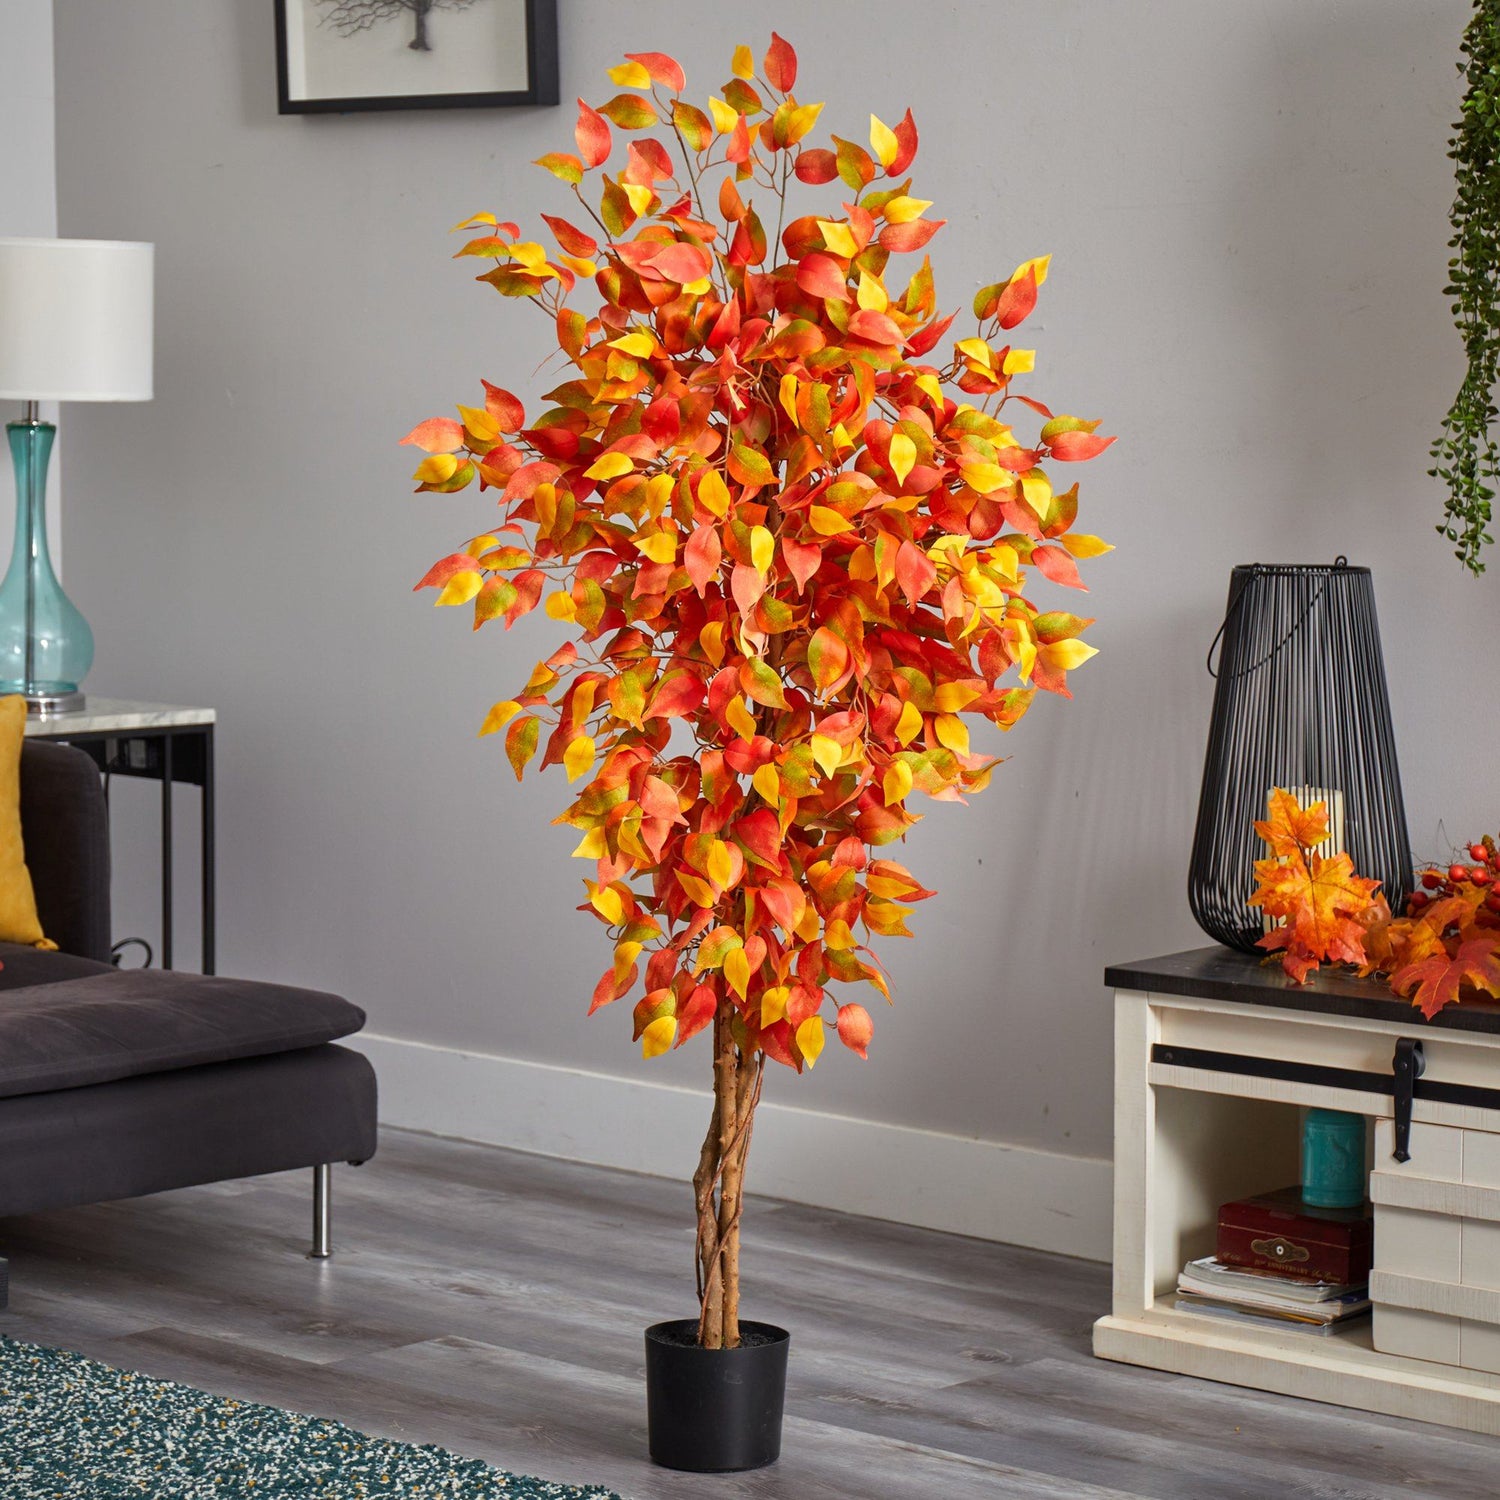 5’ Autumn Ficus Artificial Fall Tree